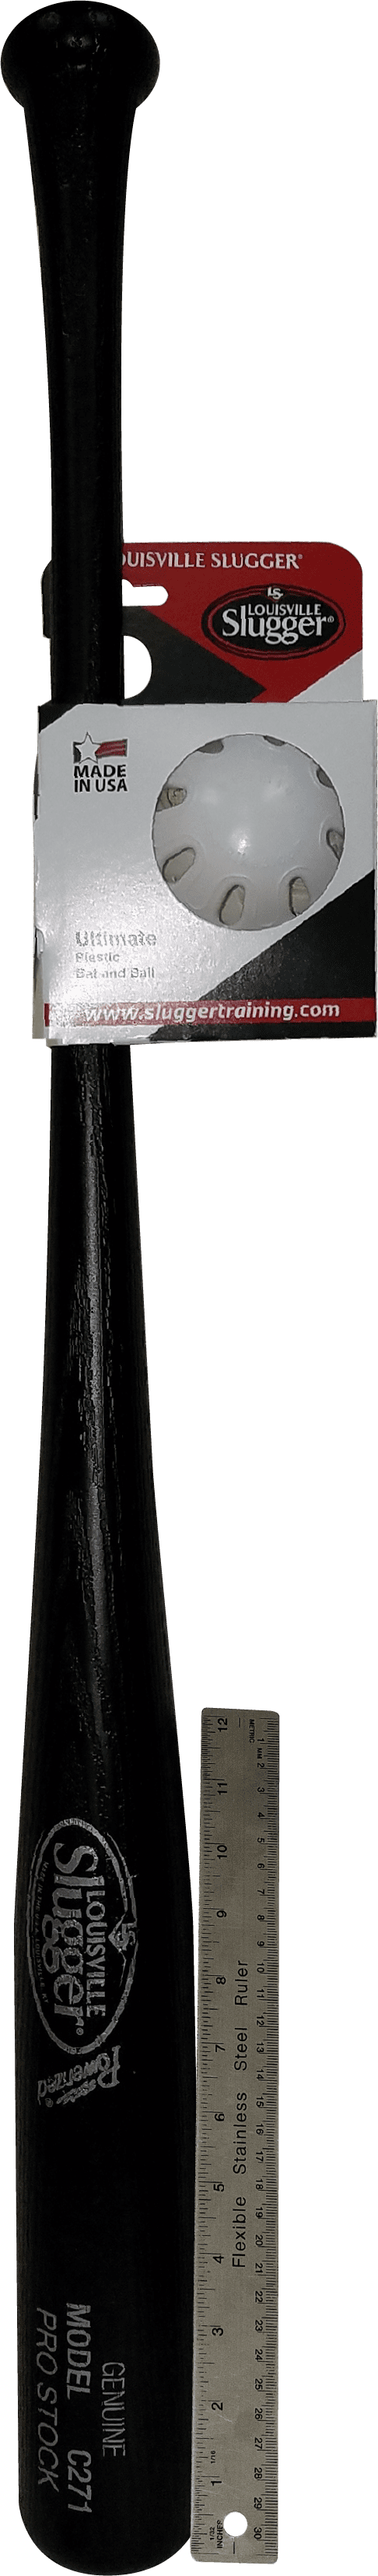 Louisville Slugger Ultimate Plastic Bat & Ball Combo, Black